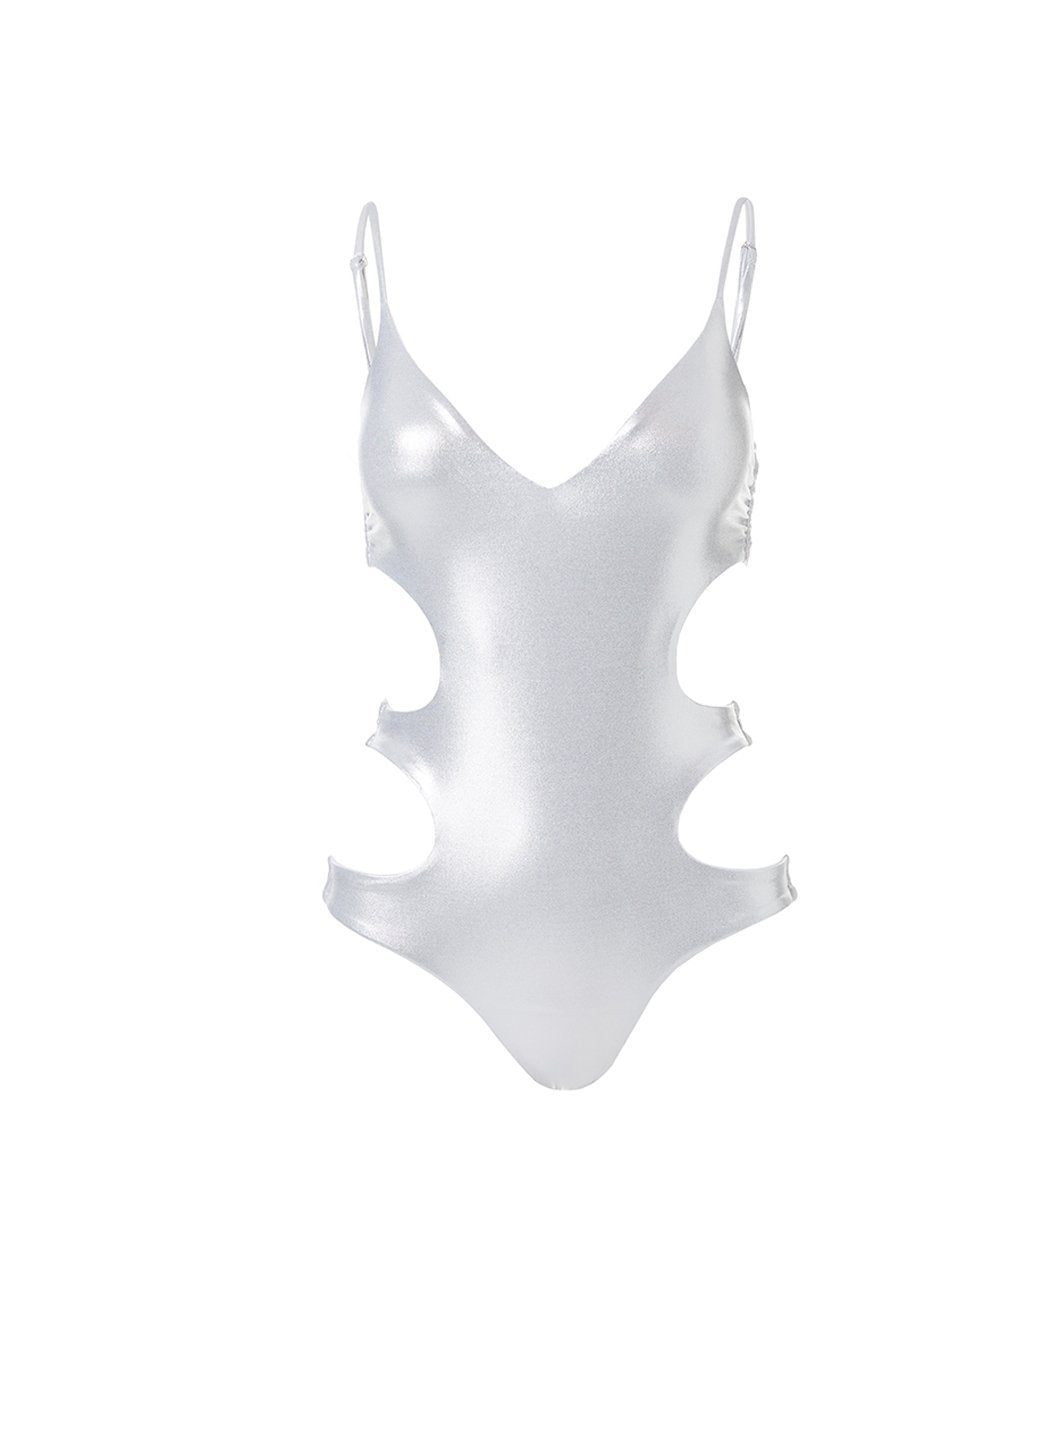 santorini silver overtheshoulder cutout onepiece swimsuit 2019